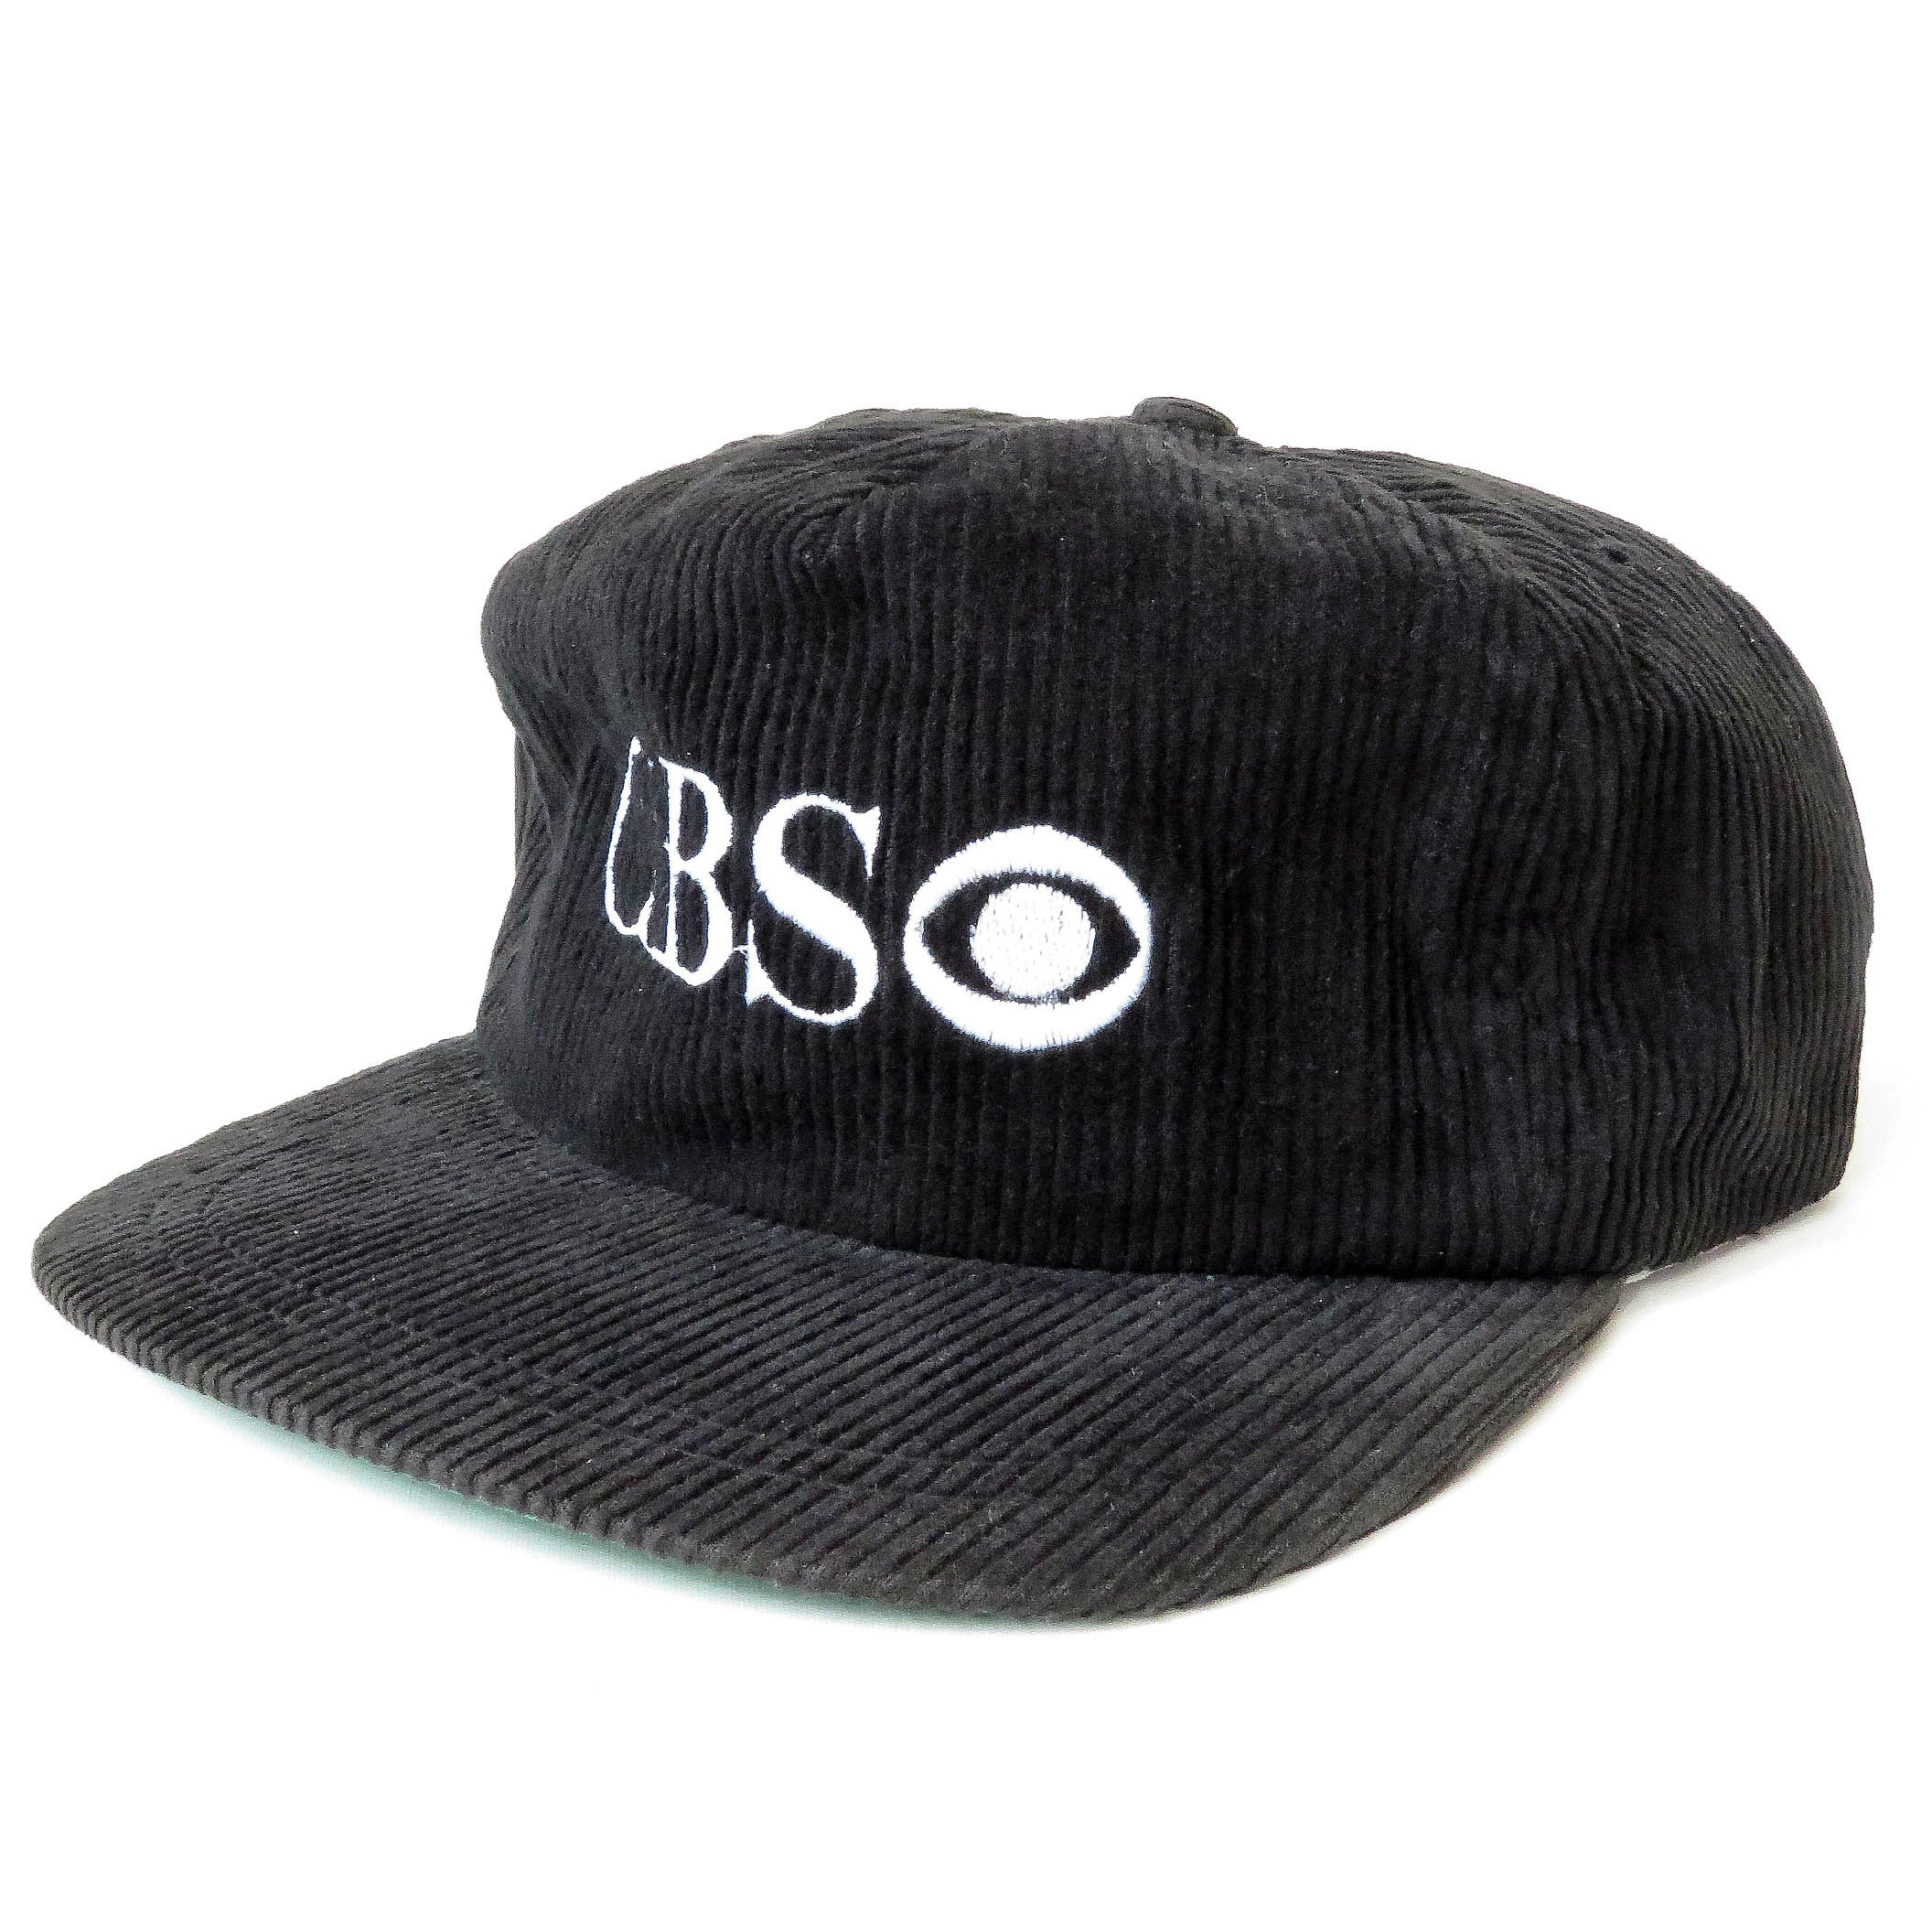 Vintage CBS Corduroy Strapback Hat